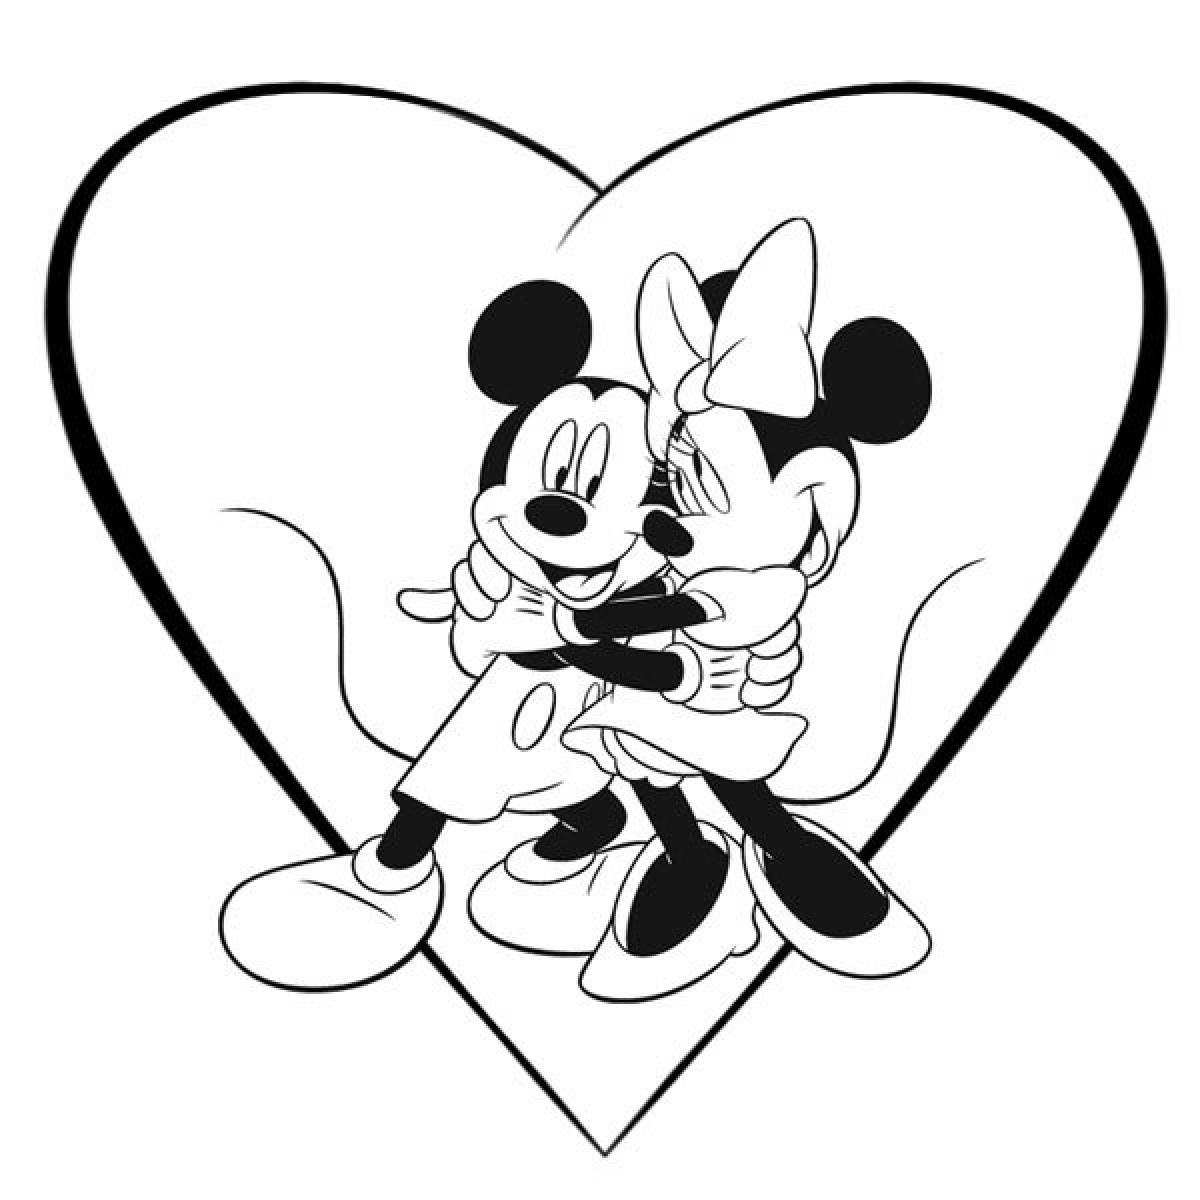 Mickey and mini